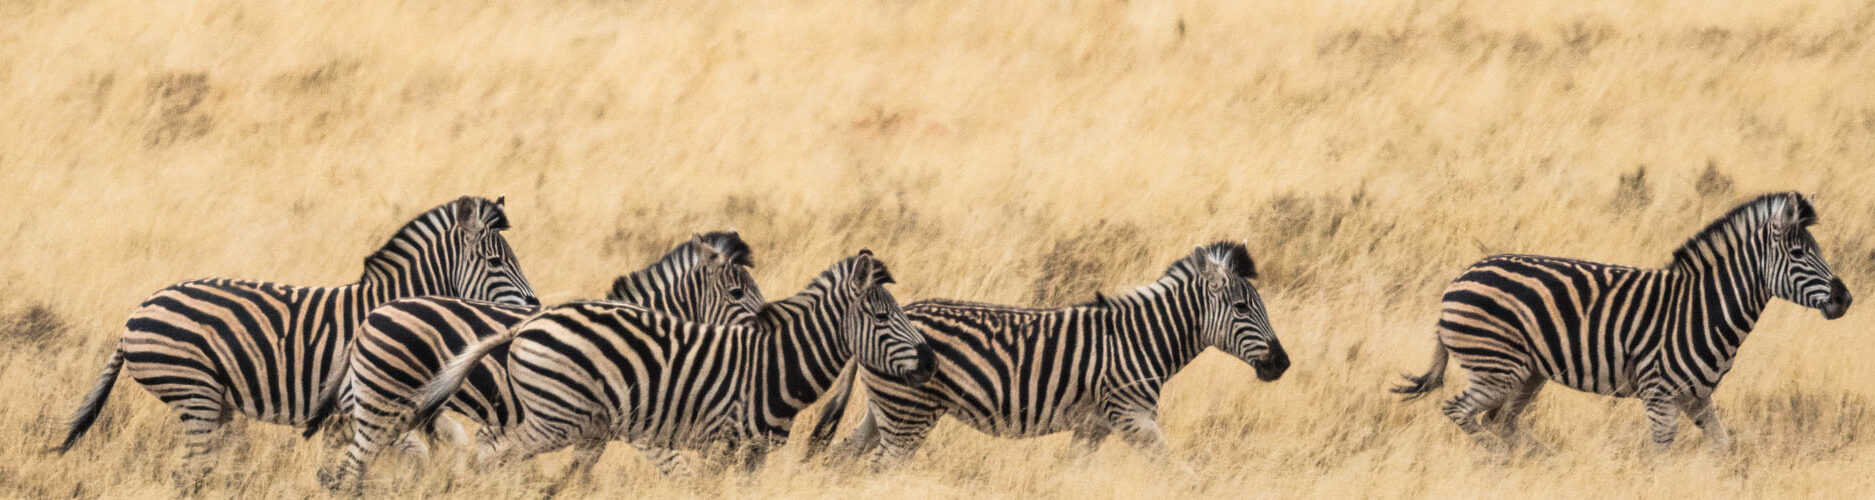 herd of zebra in karoo grass